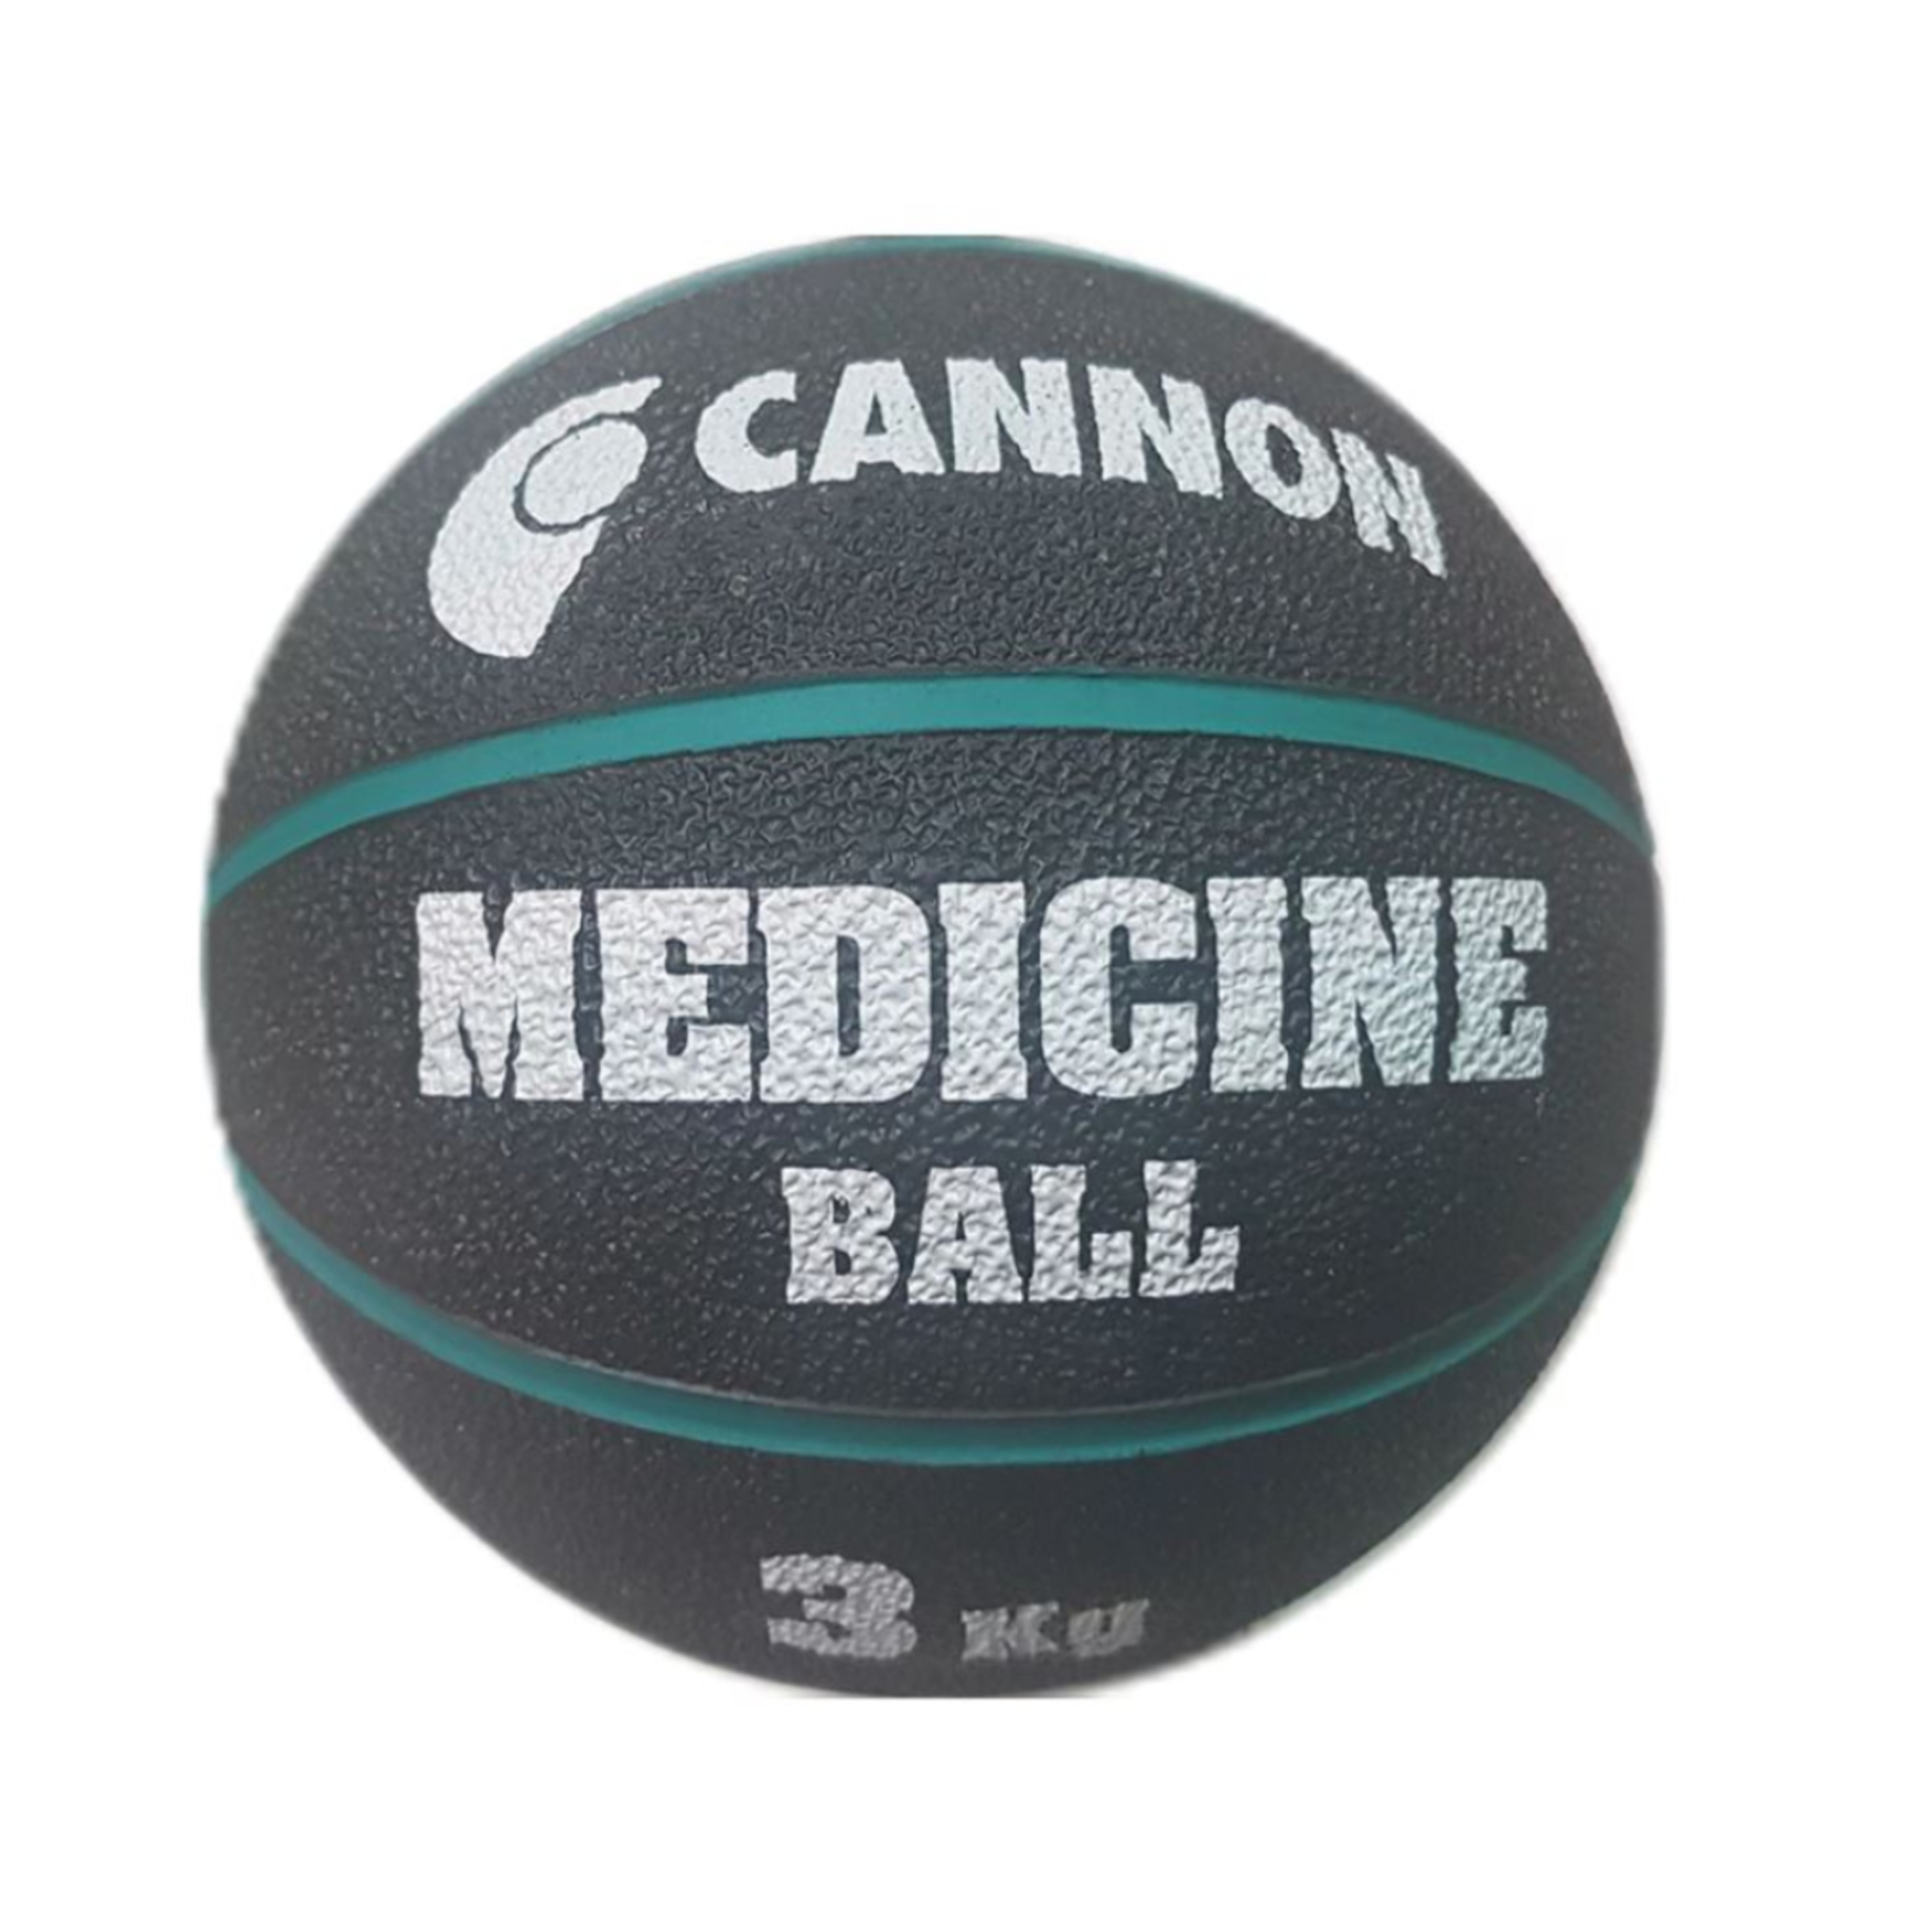 Balon Medicinal Cannon 3 Kilos Sin Bote - Negro/Verde  MKP